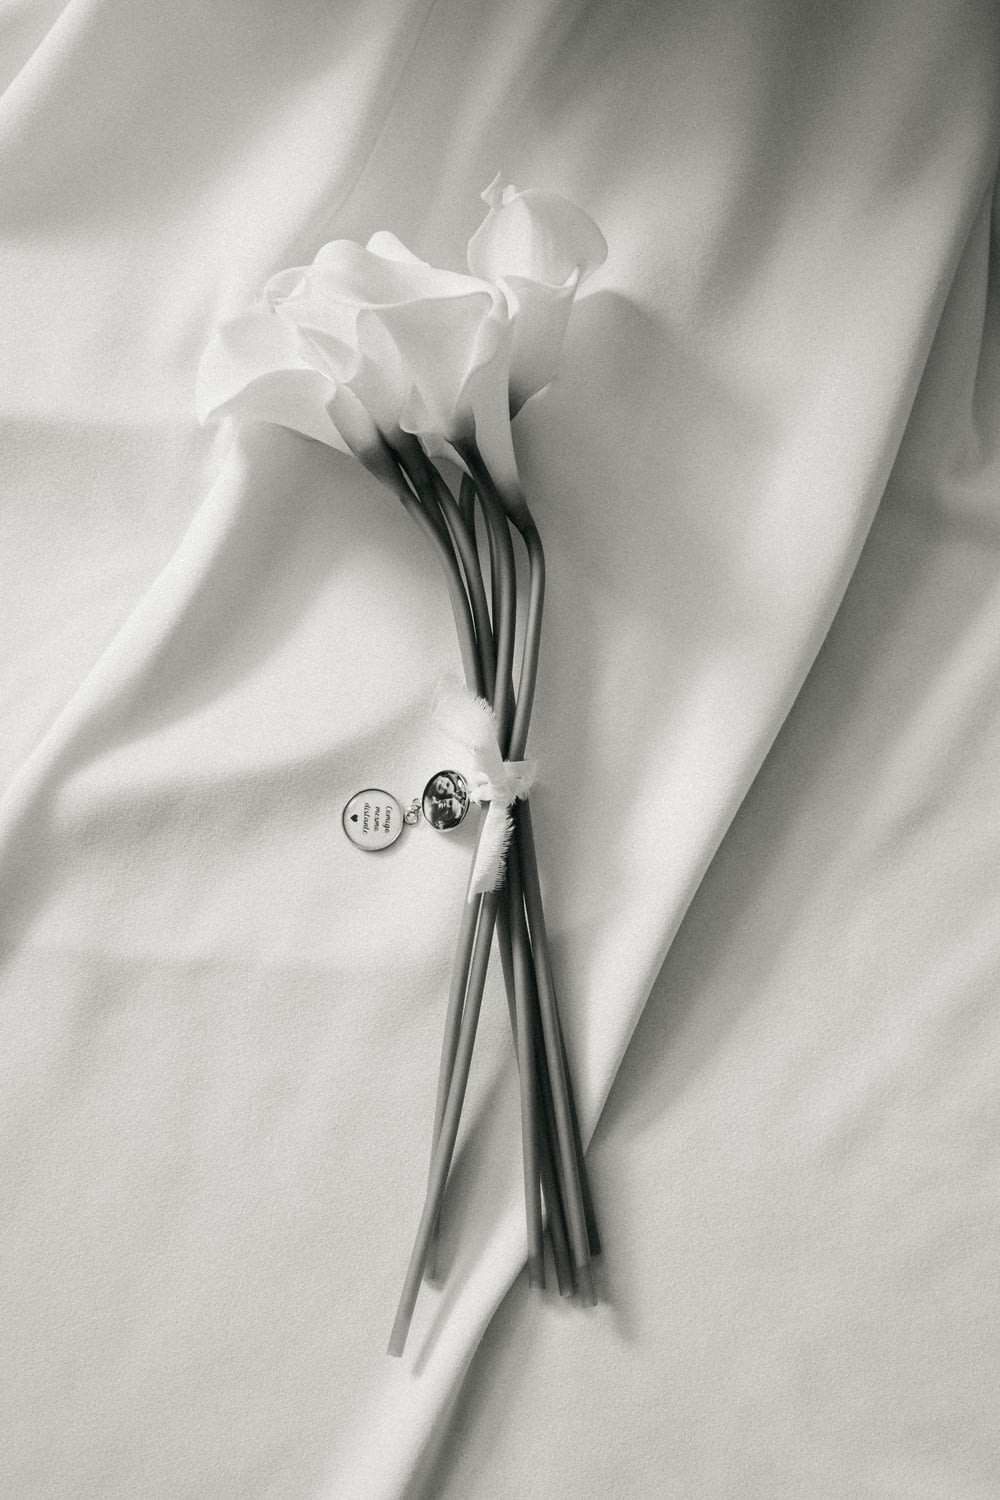 silver diamond studded ring on white textile